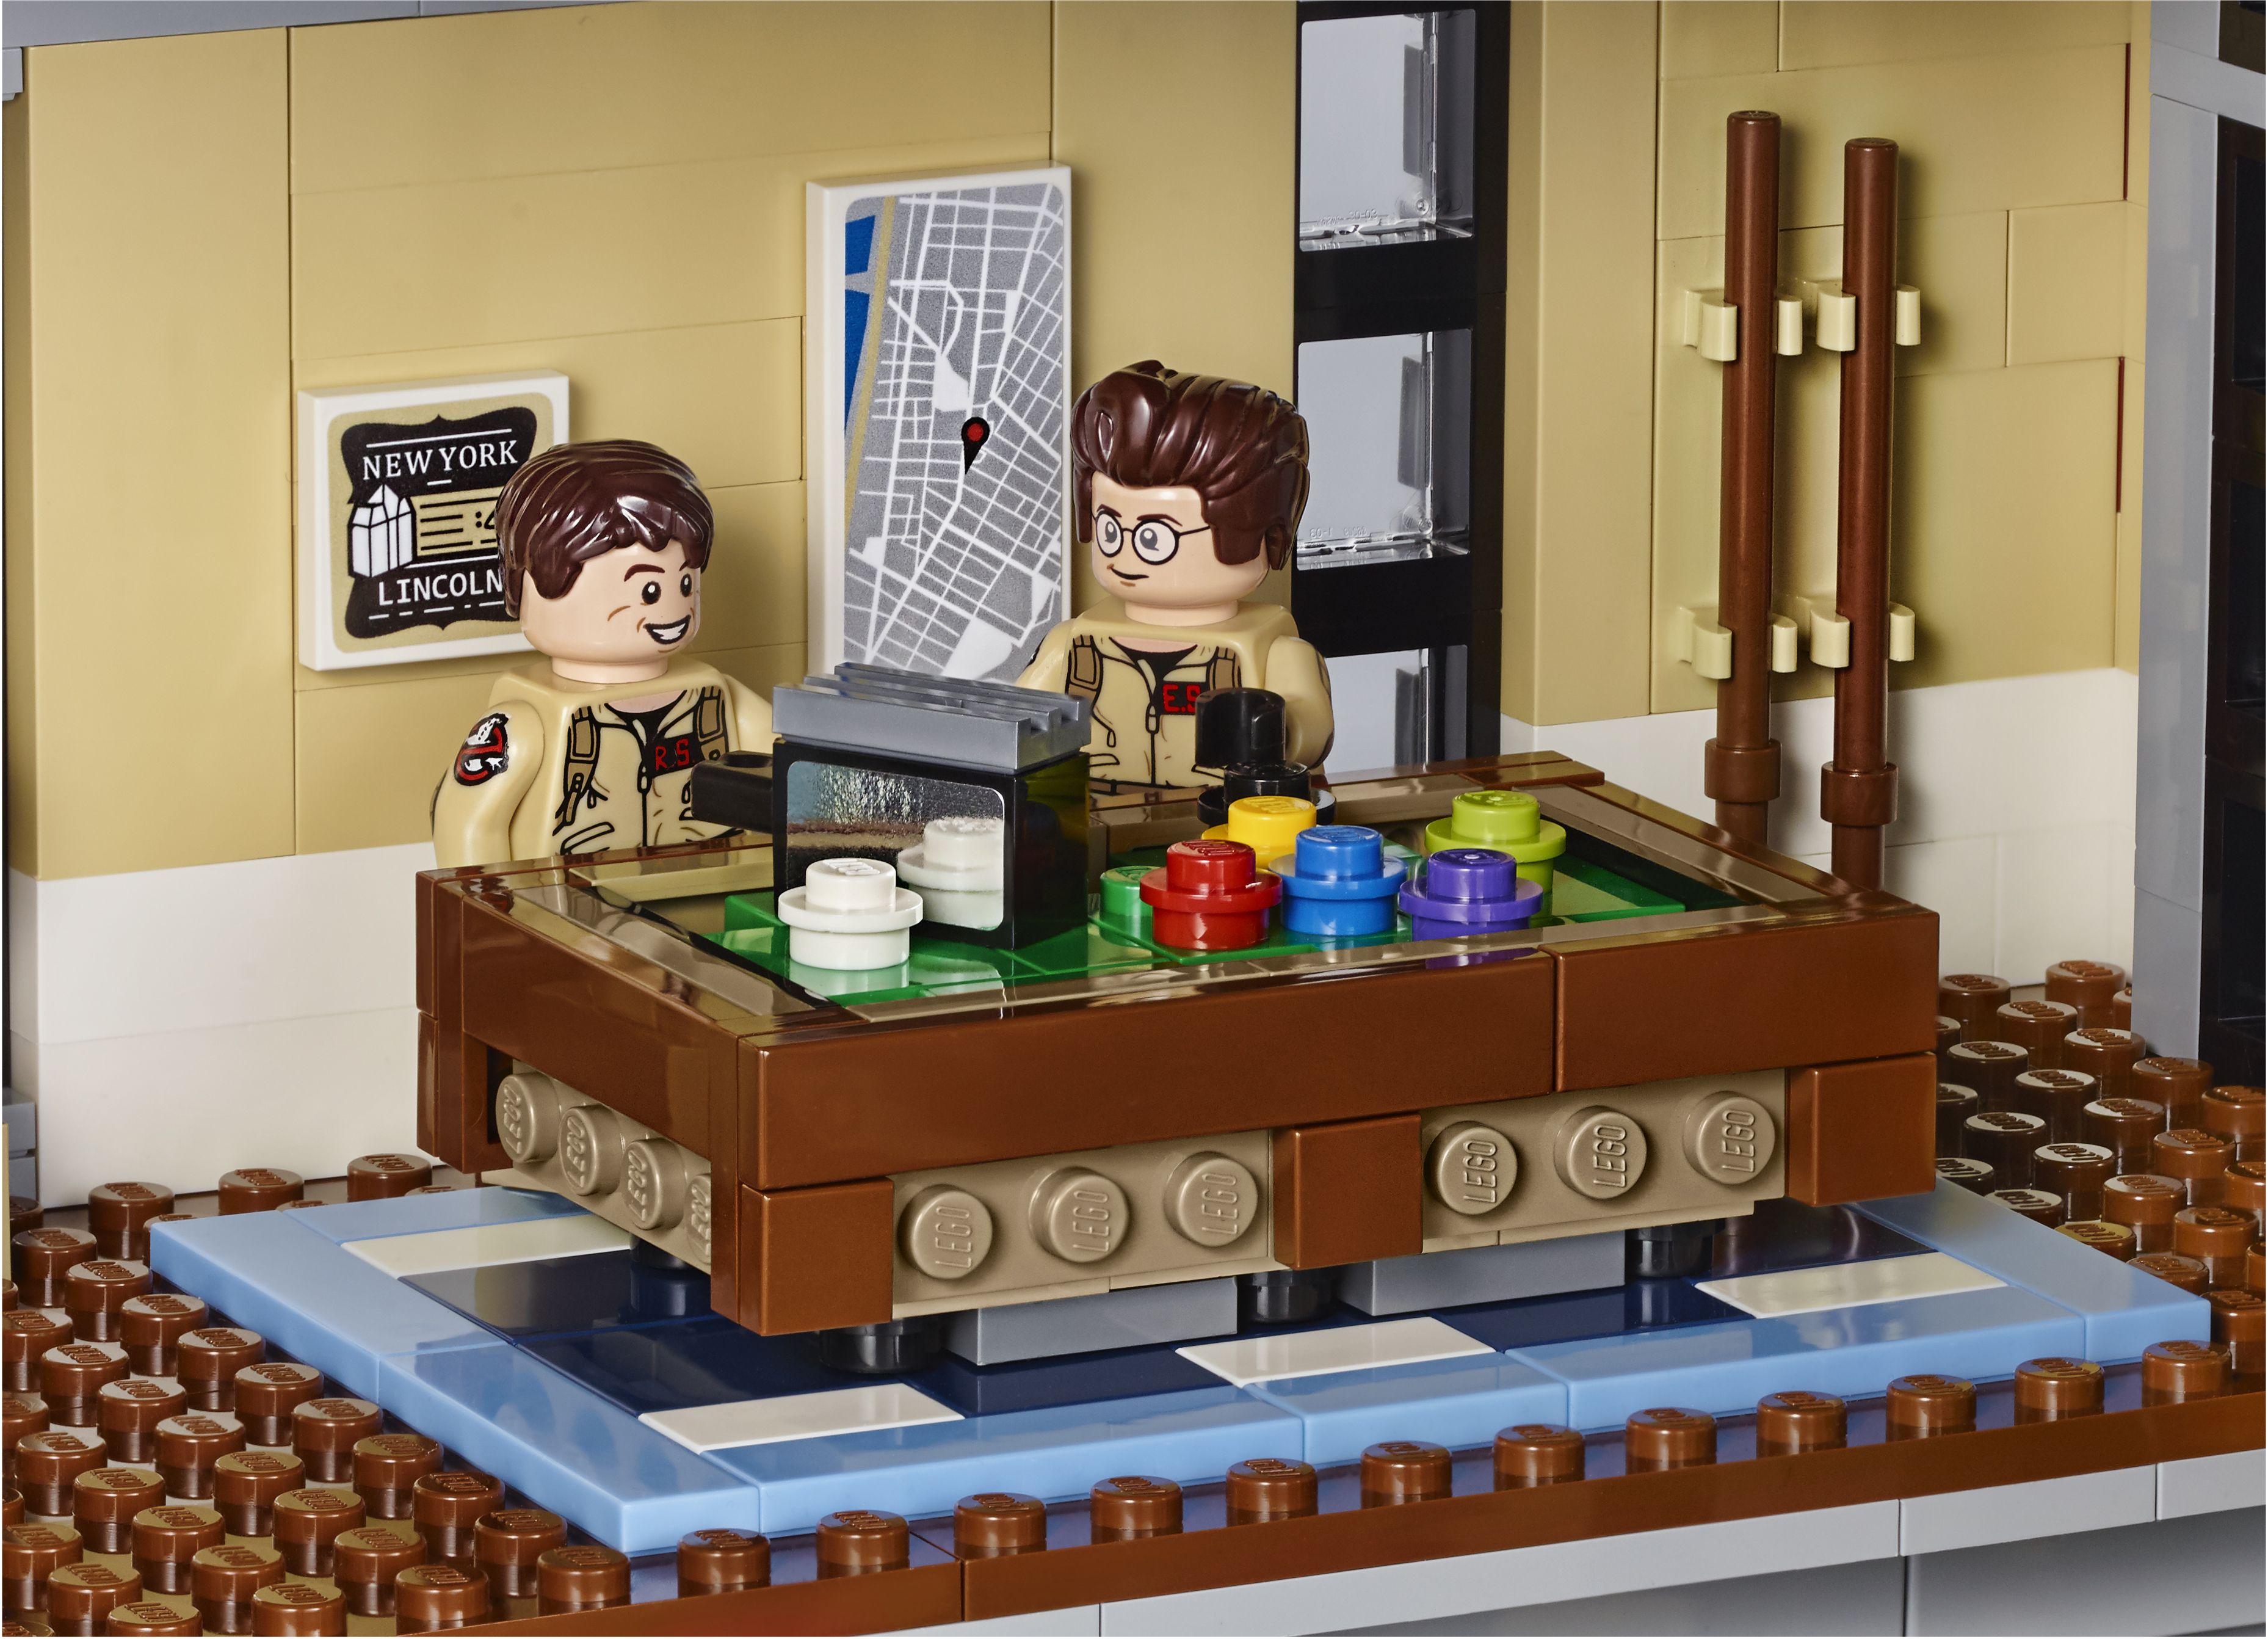 The LEGO Firehouse HQ's are frighteningly - Jay's Brick Blog